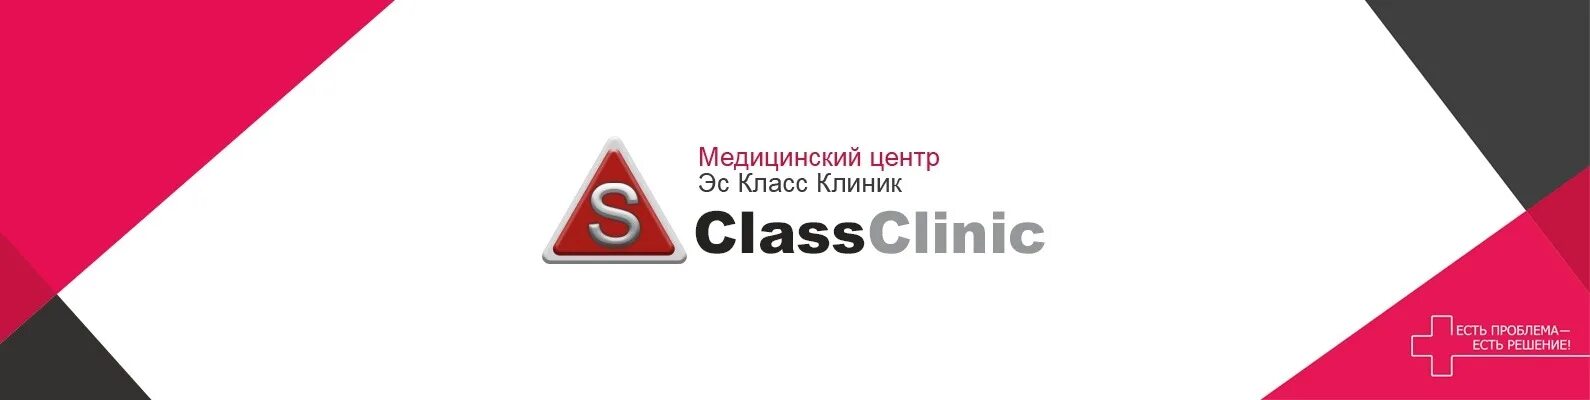 ЭС класс клиник. S class Clinic логотип. С класс клиник Волгоград. ЭС класс клиник Брянск.